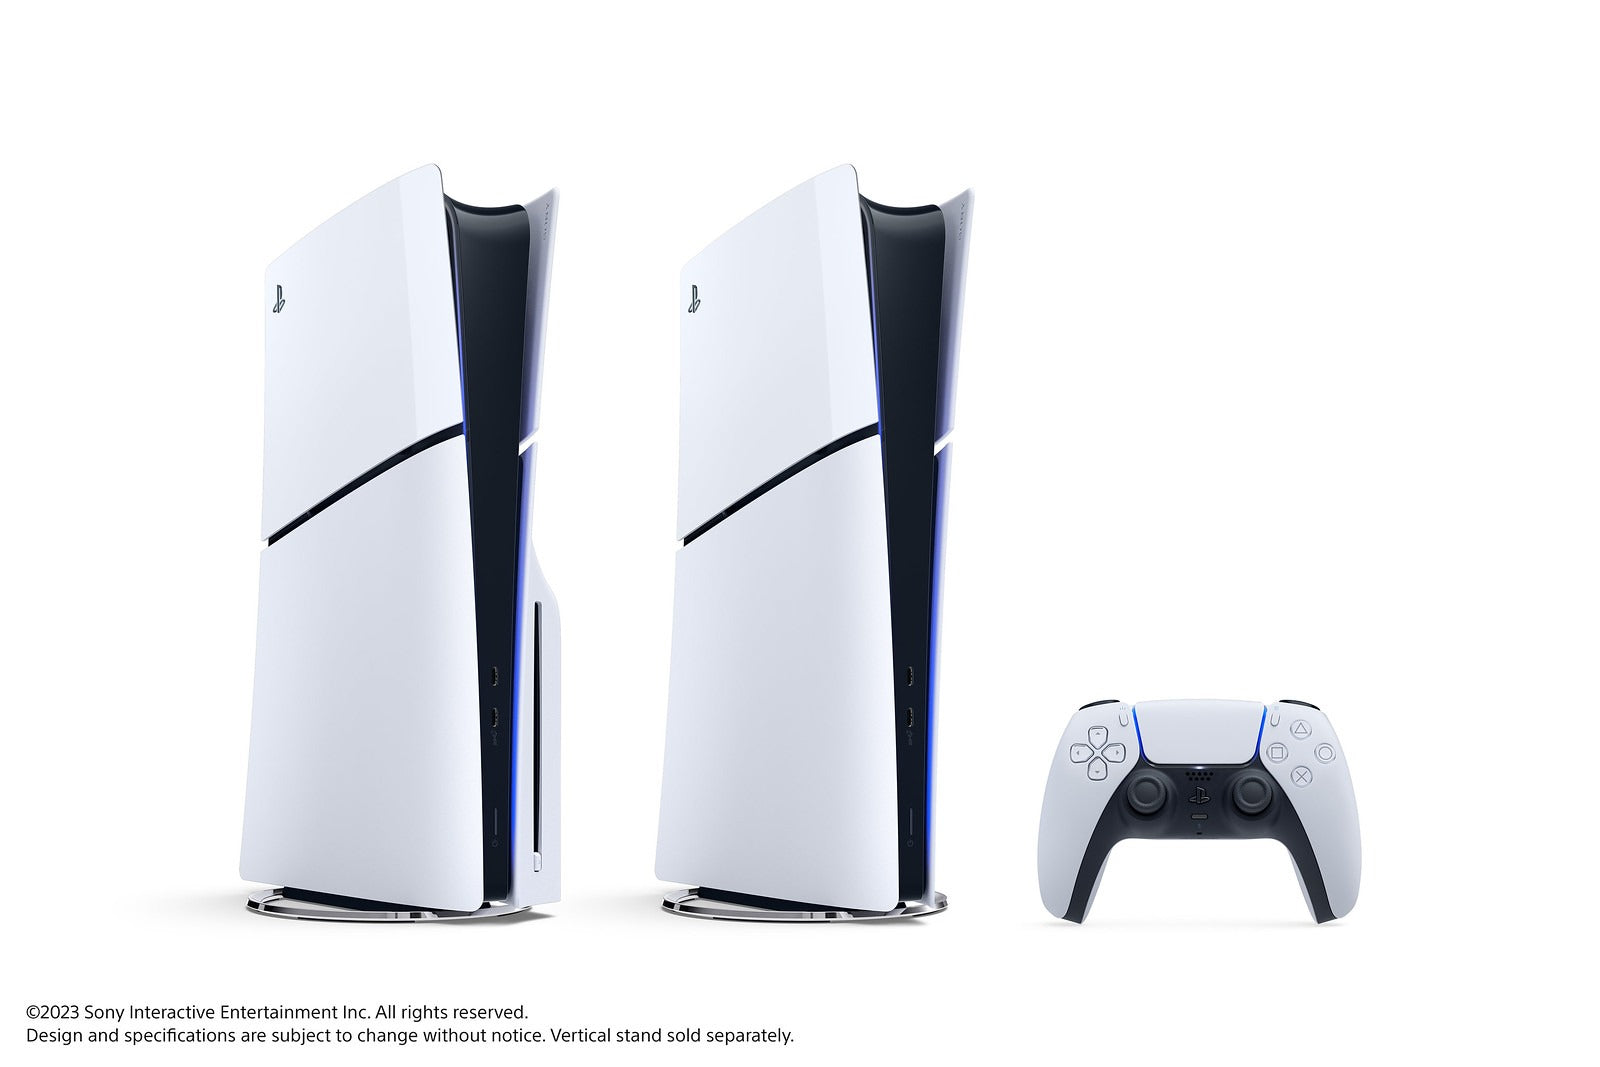 Sony PlayStation 5 Slim PS5 遊戲主機 (平行進口)